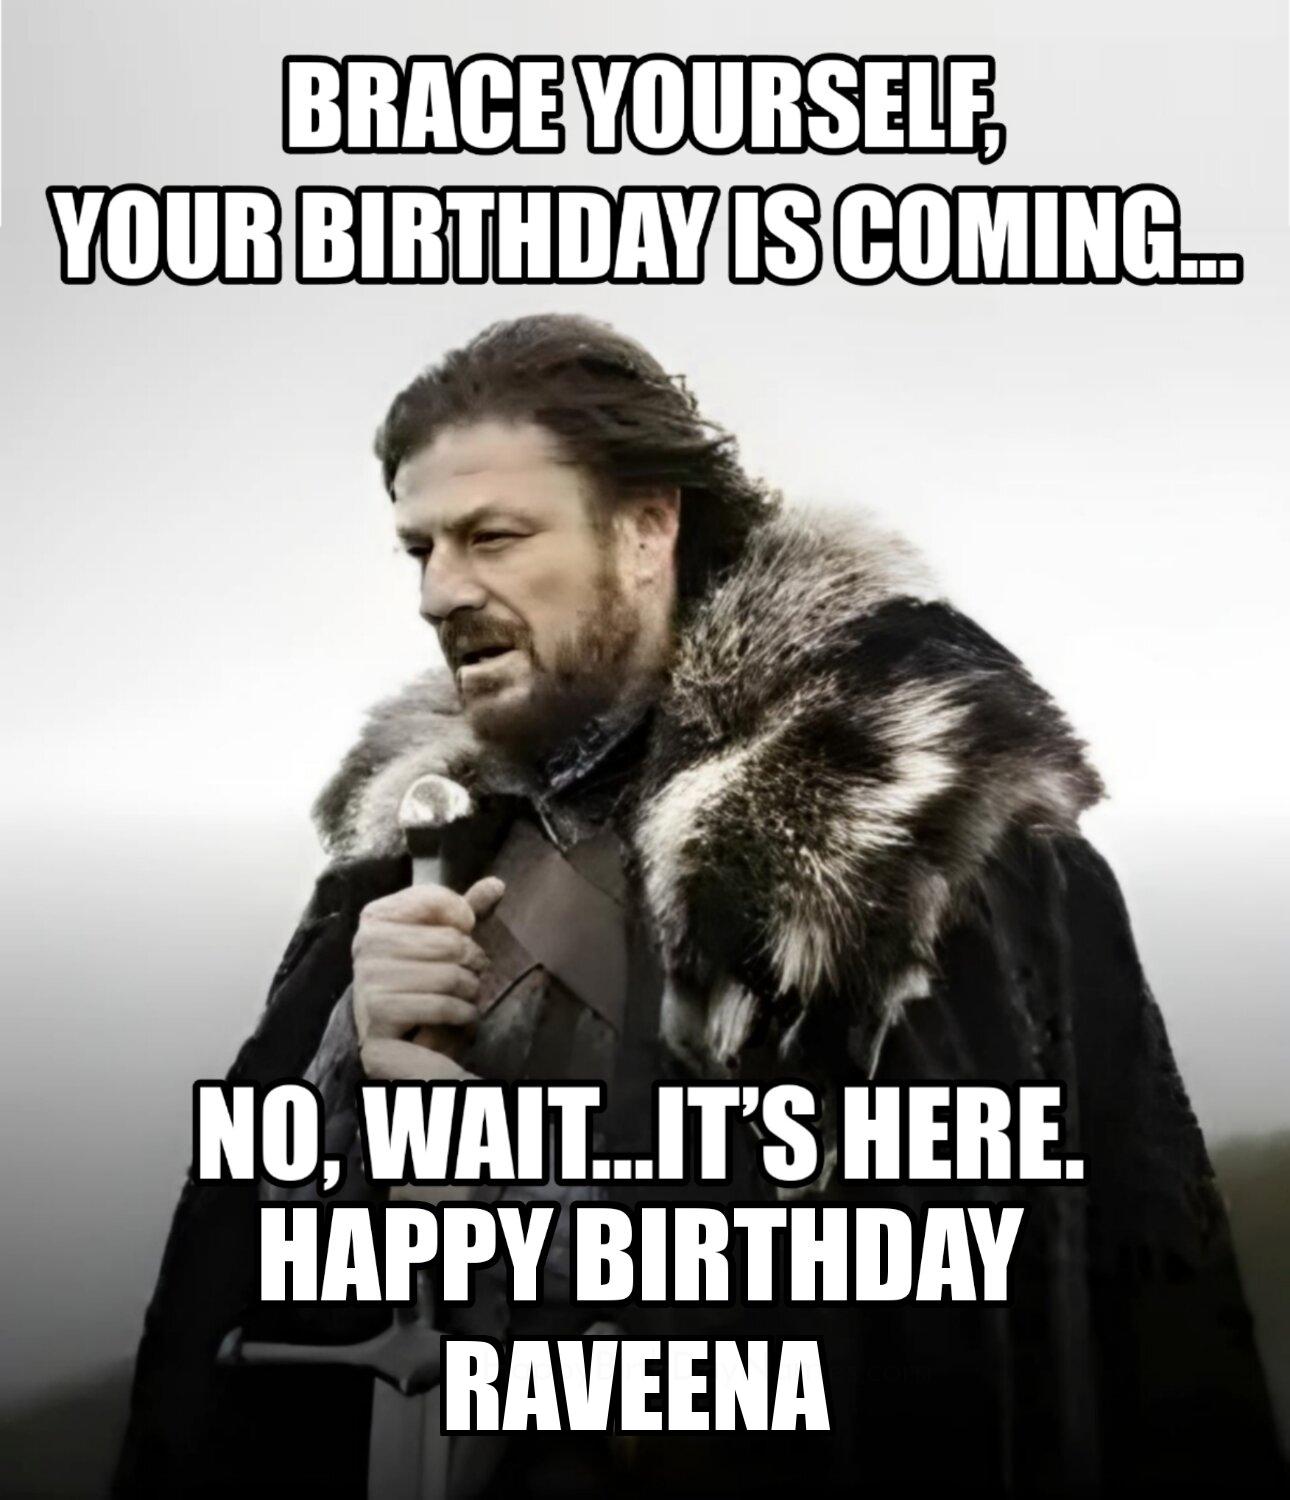 Happy Birthday Raveena Brace Yourself Your Birthday Is Coming Meme